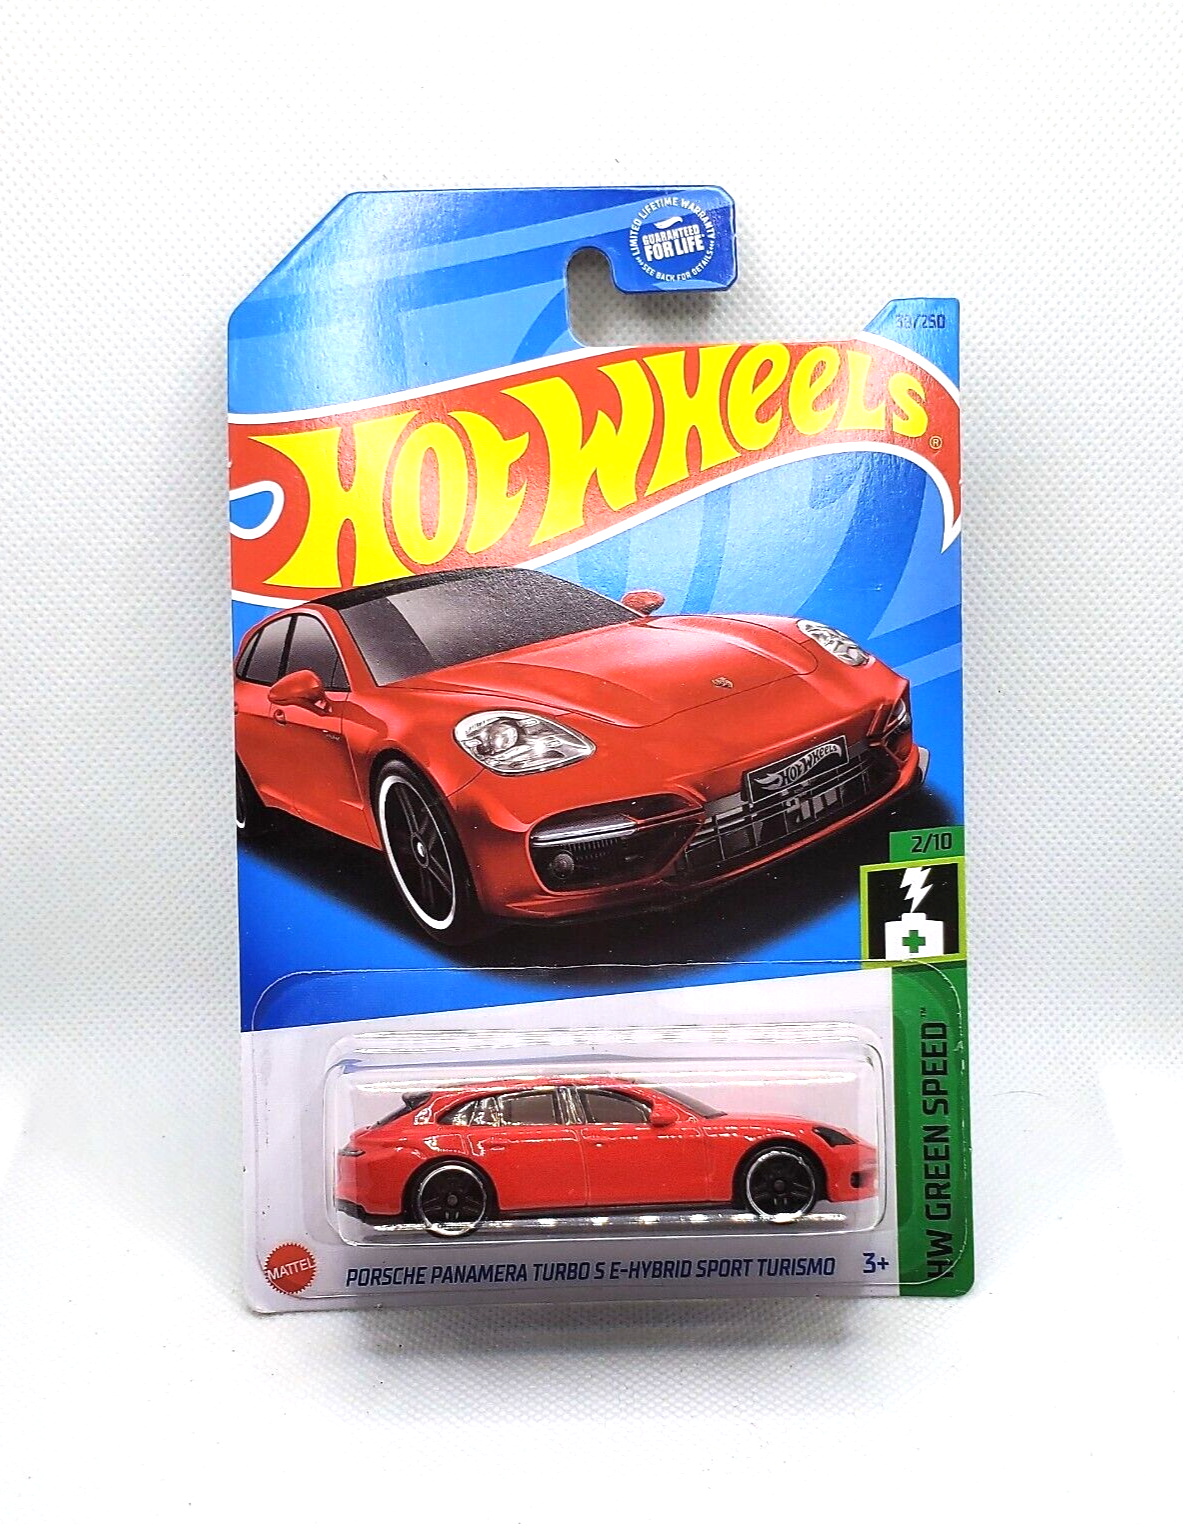 2023 Hot Wheels Porsche Panamera Turbo S E-Hybrid Sport Turismo #38 Red  887961367508 | eBay